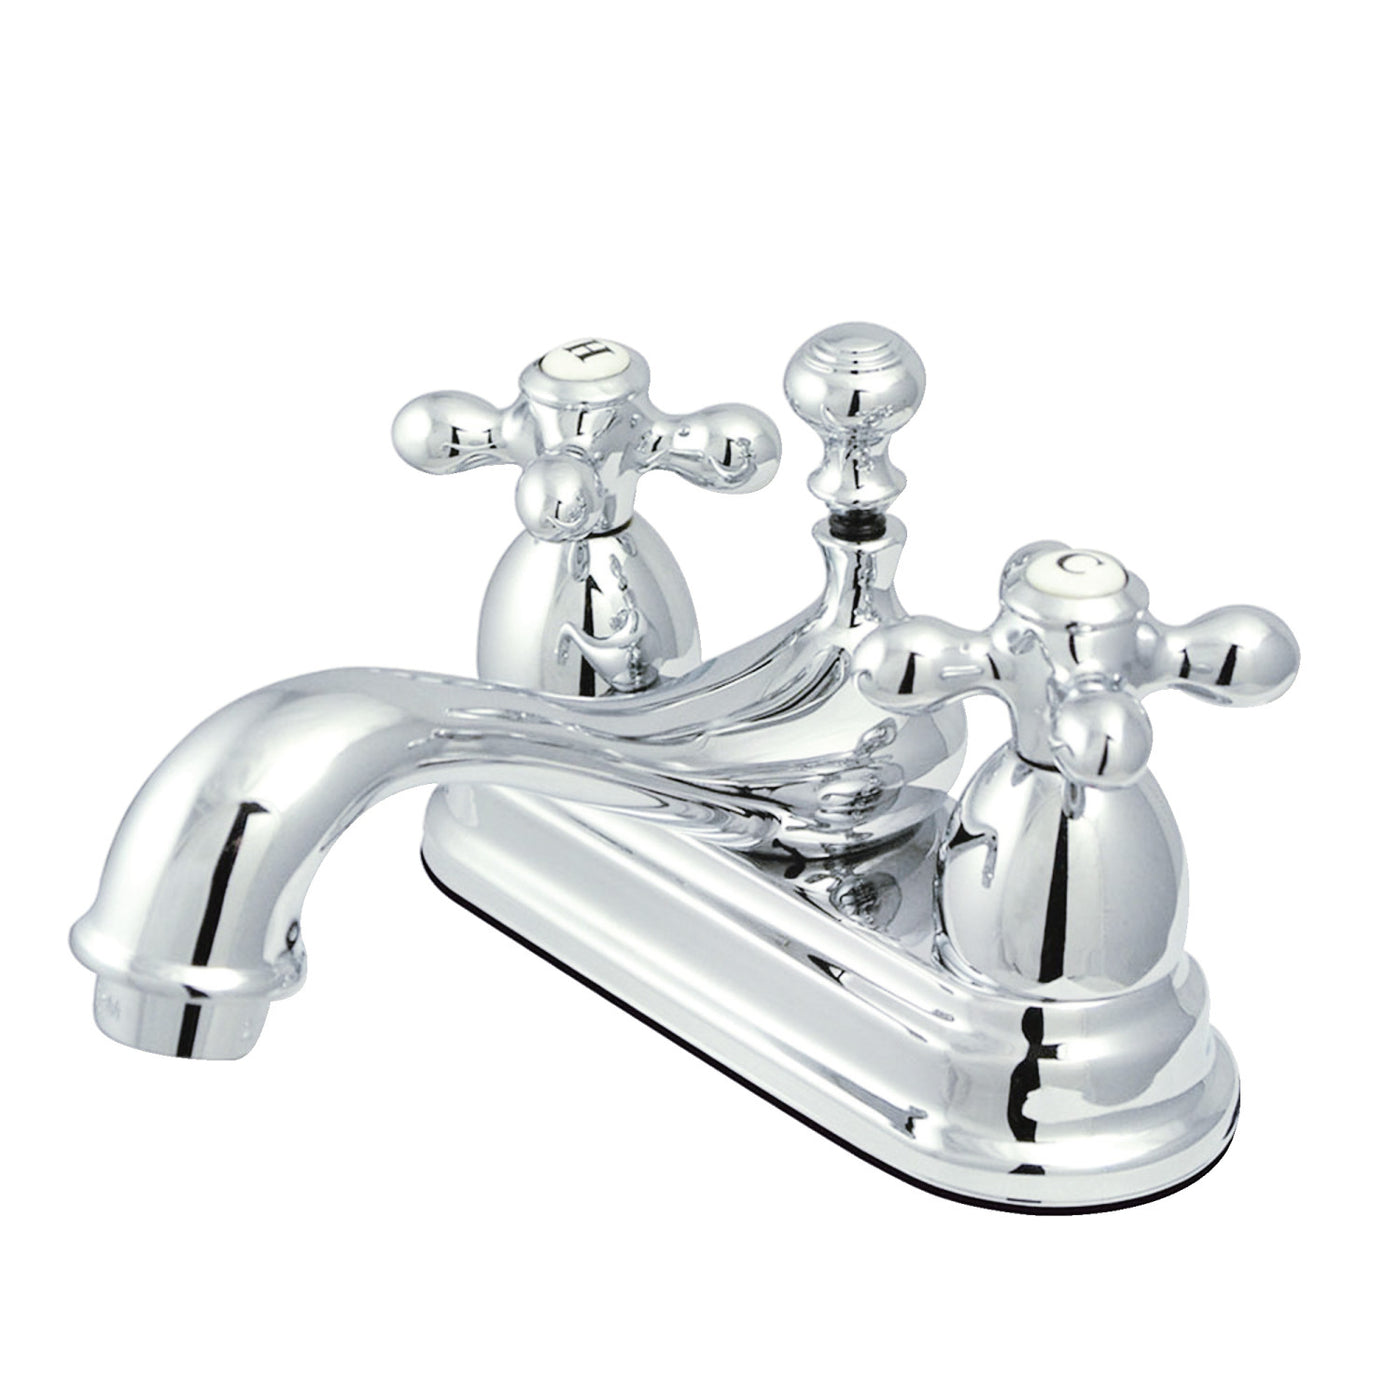 Elements of Design ES3601AX 4-Inch Centerset Bathroom Faucet, Polished Chrome